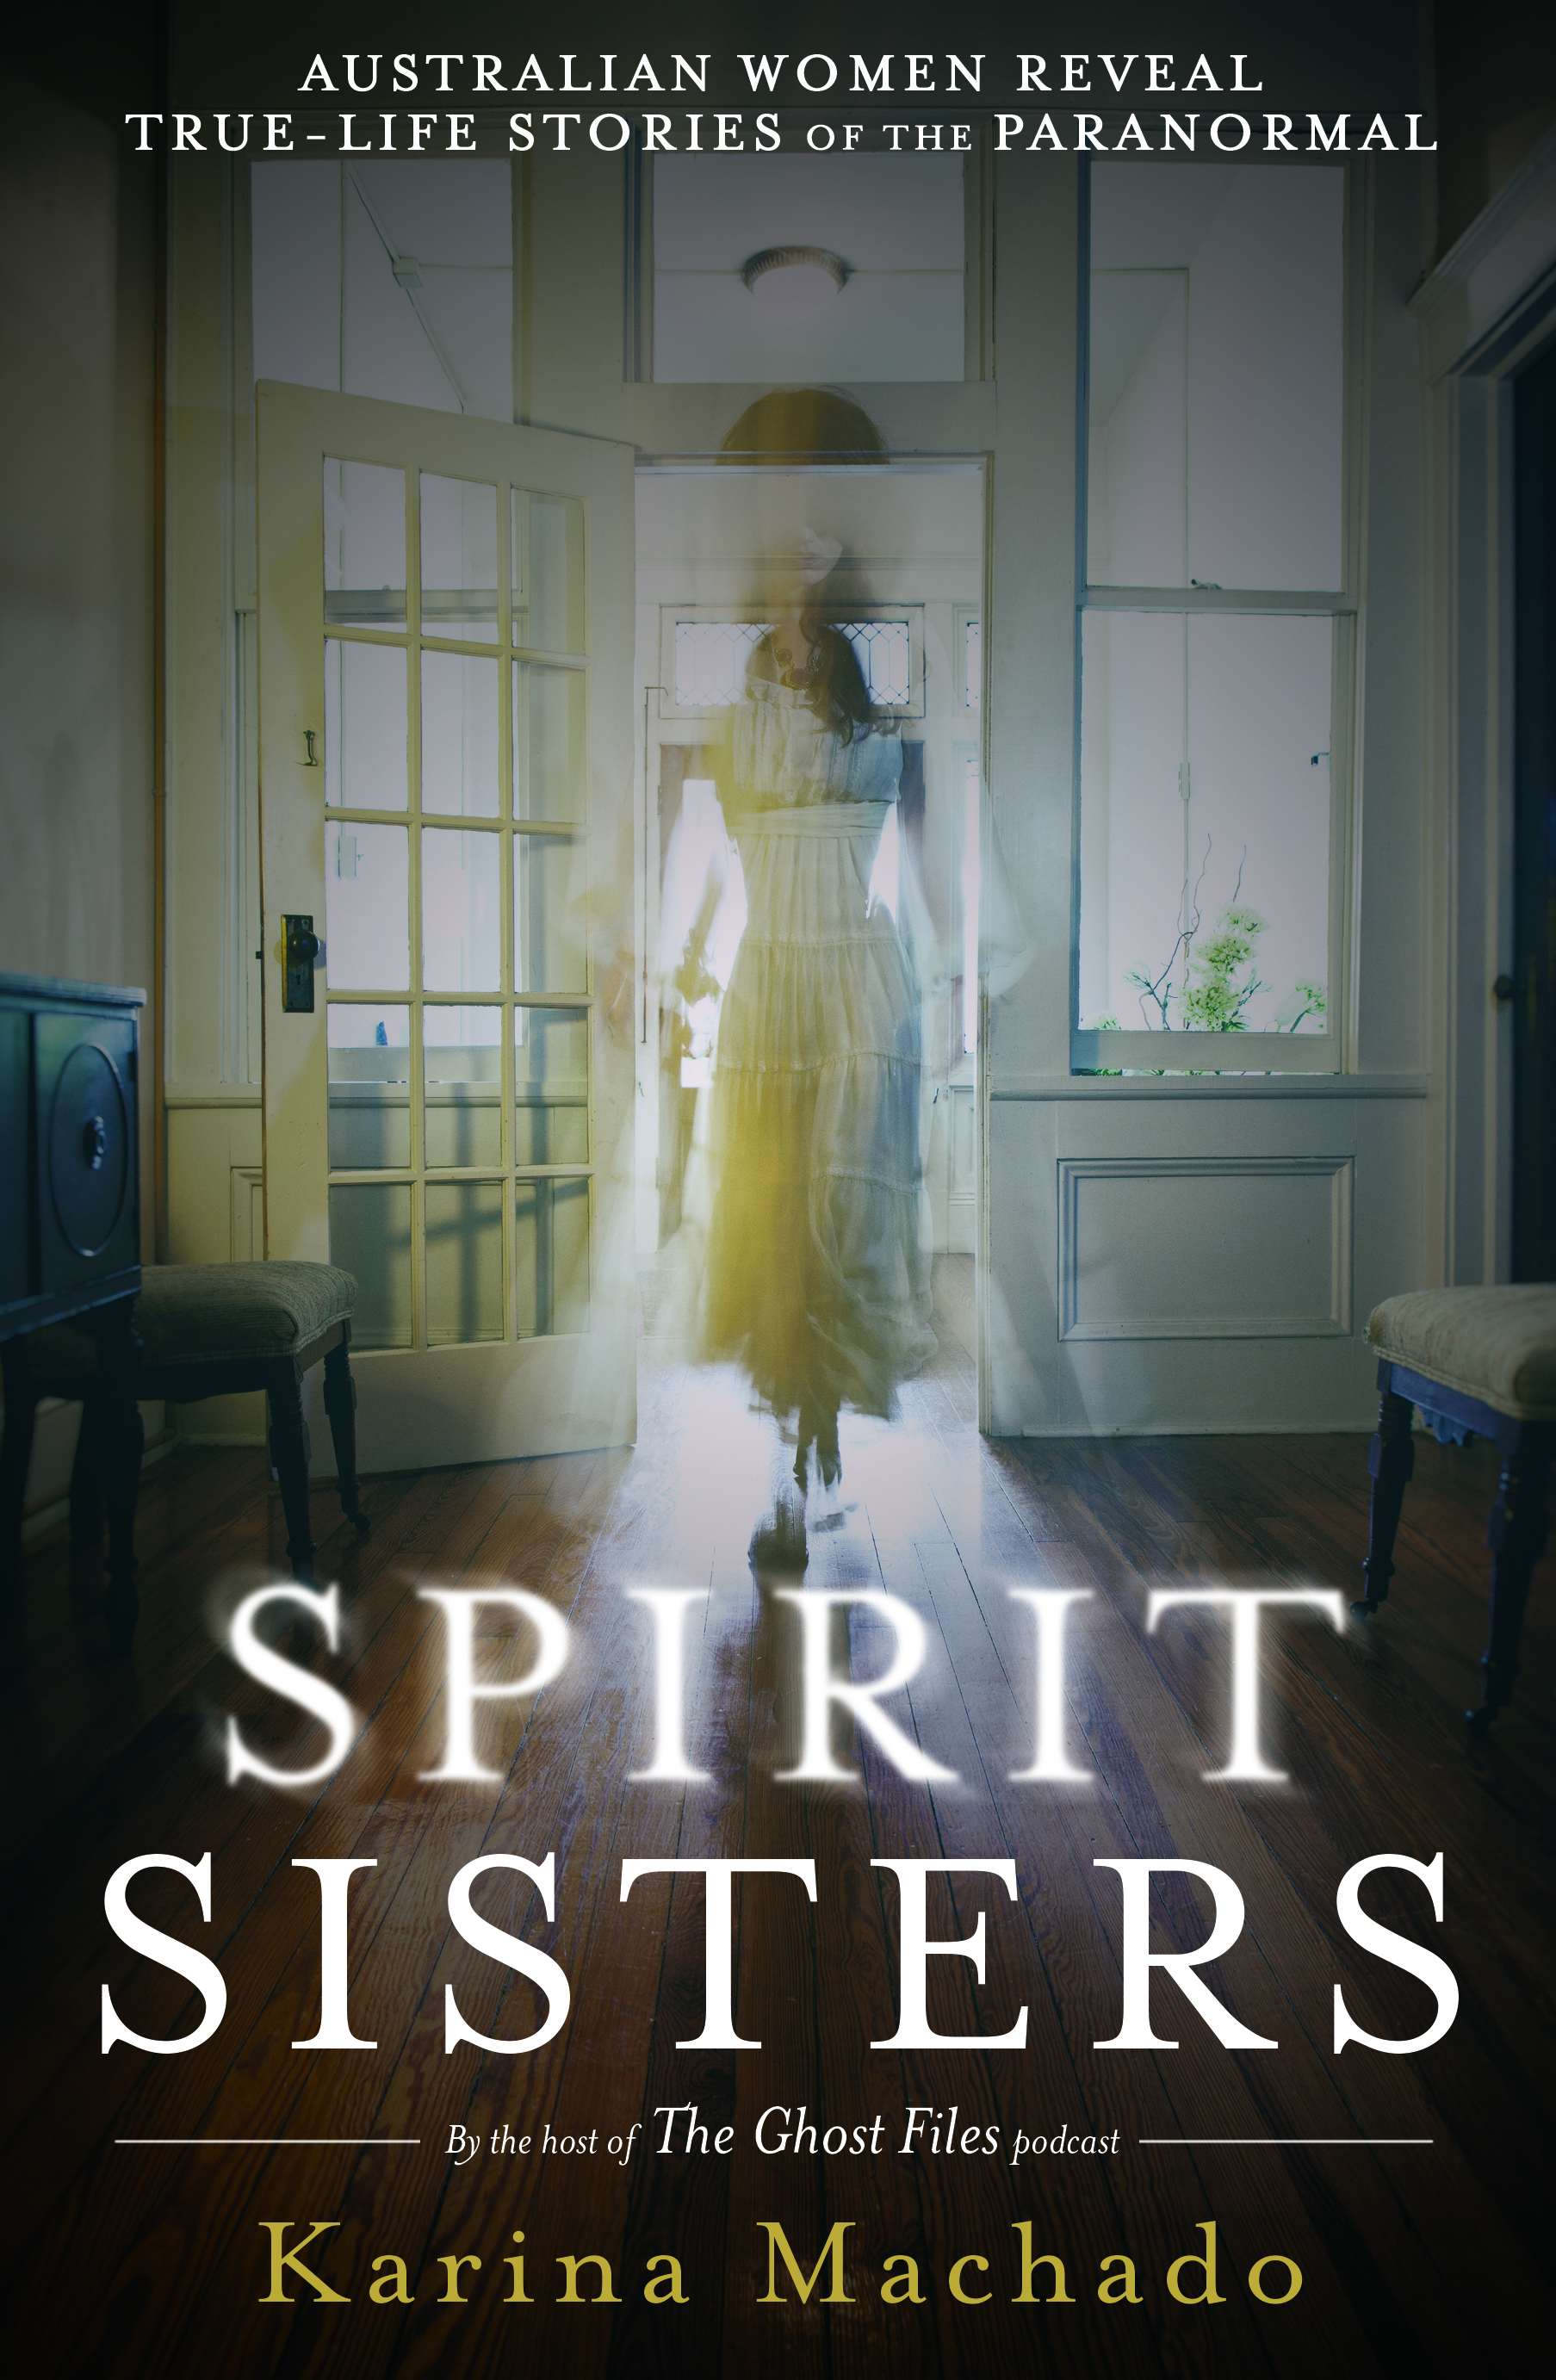 spirit sisters by Karina machado original 2009 cover